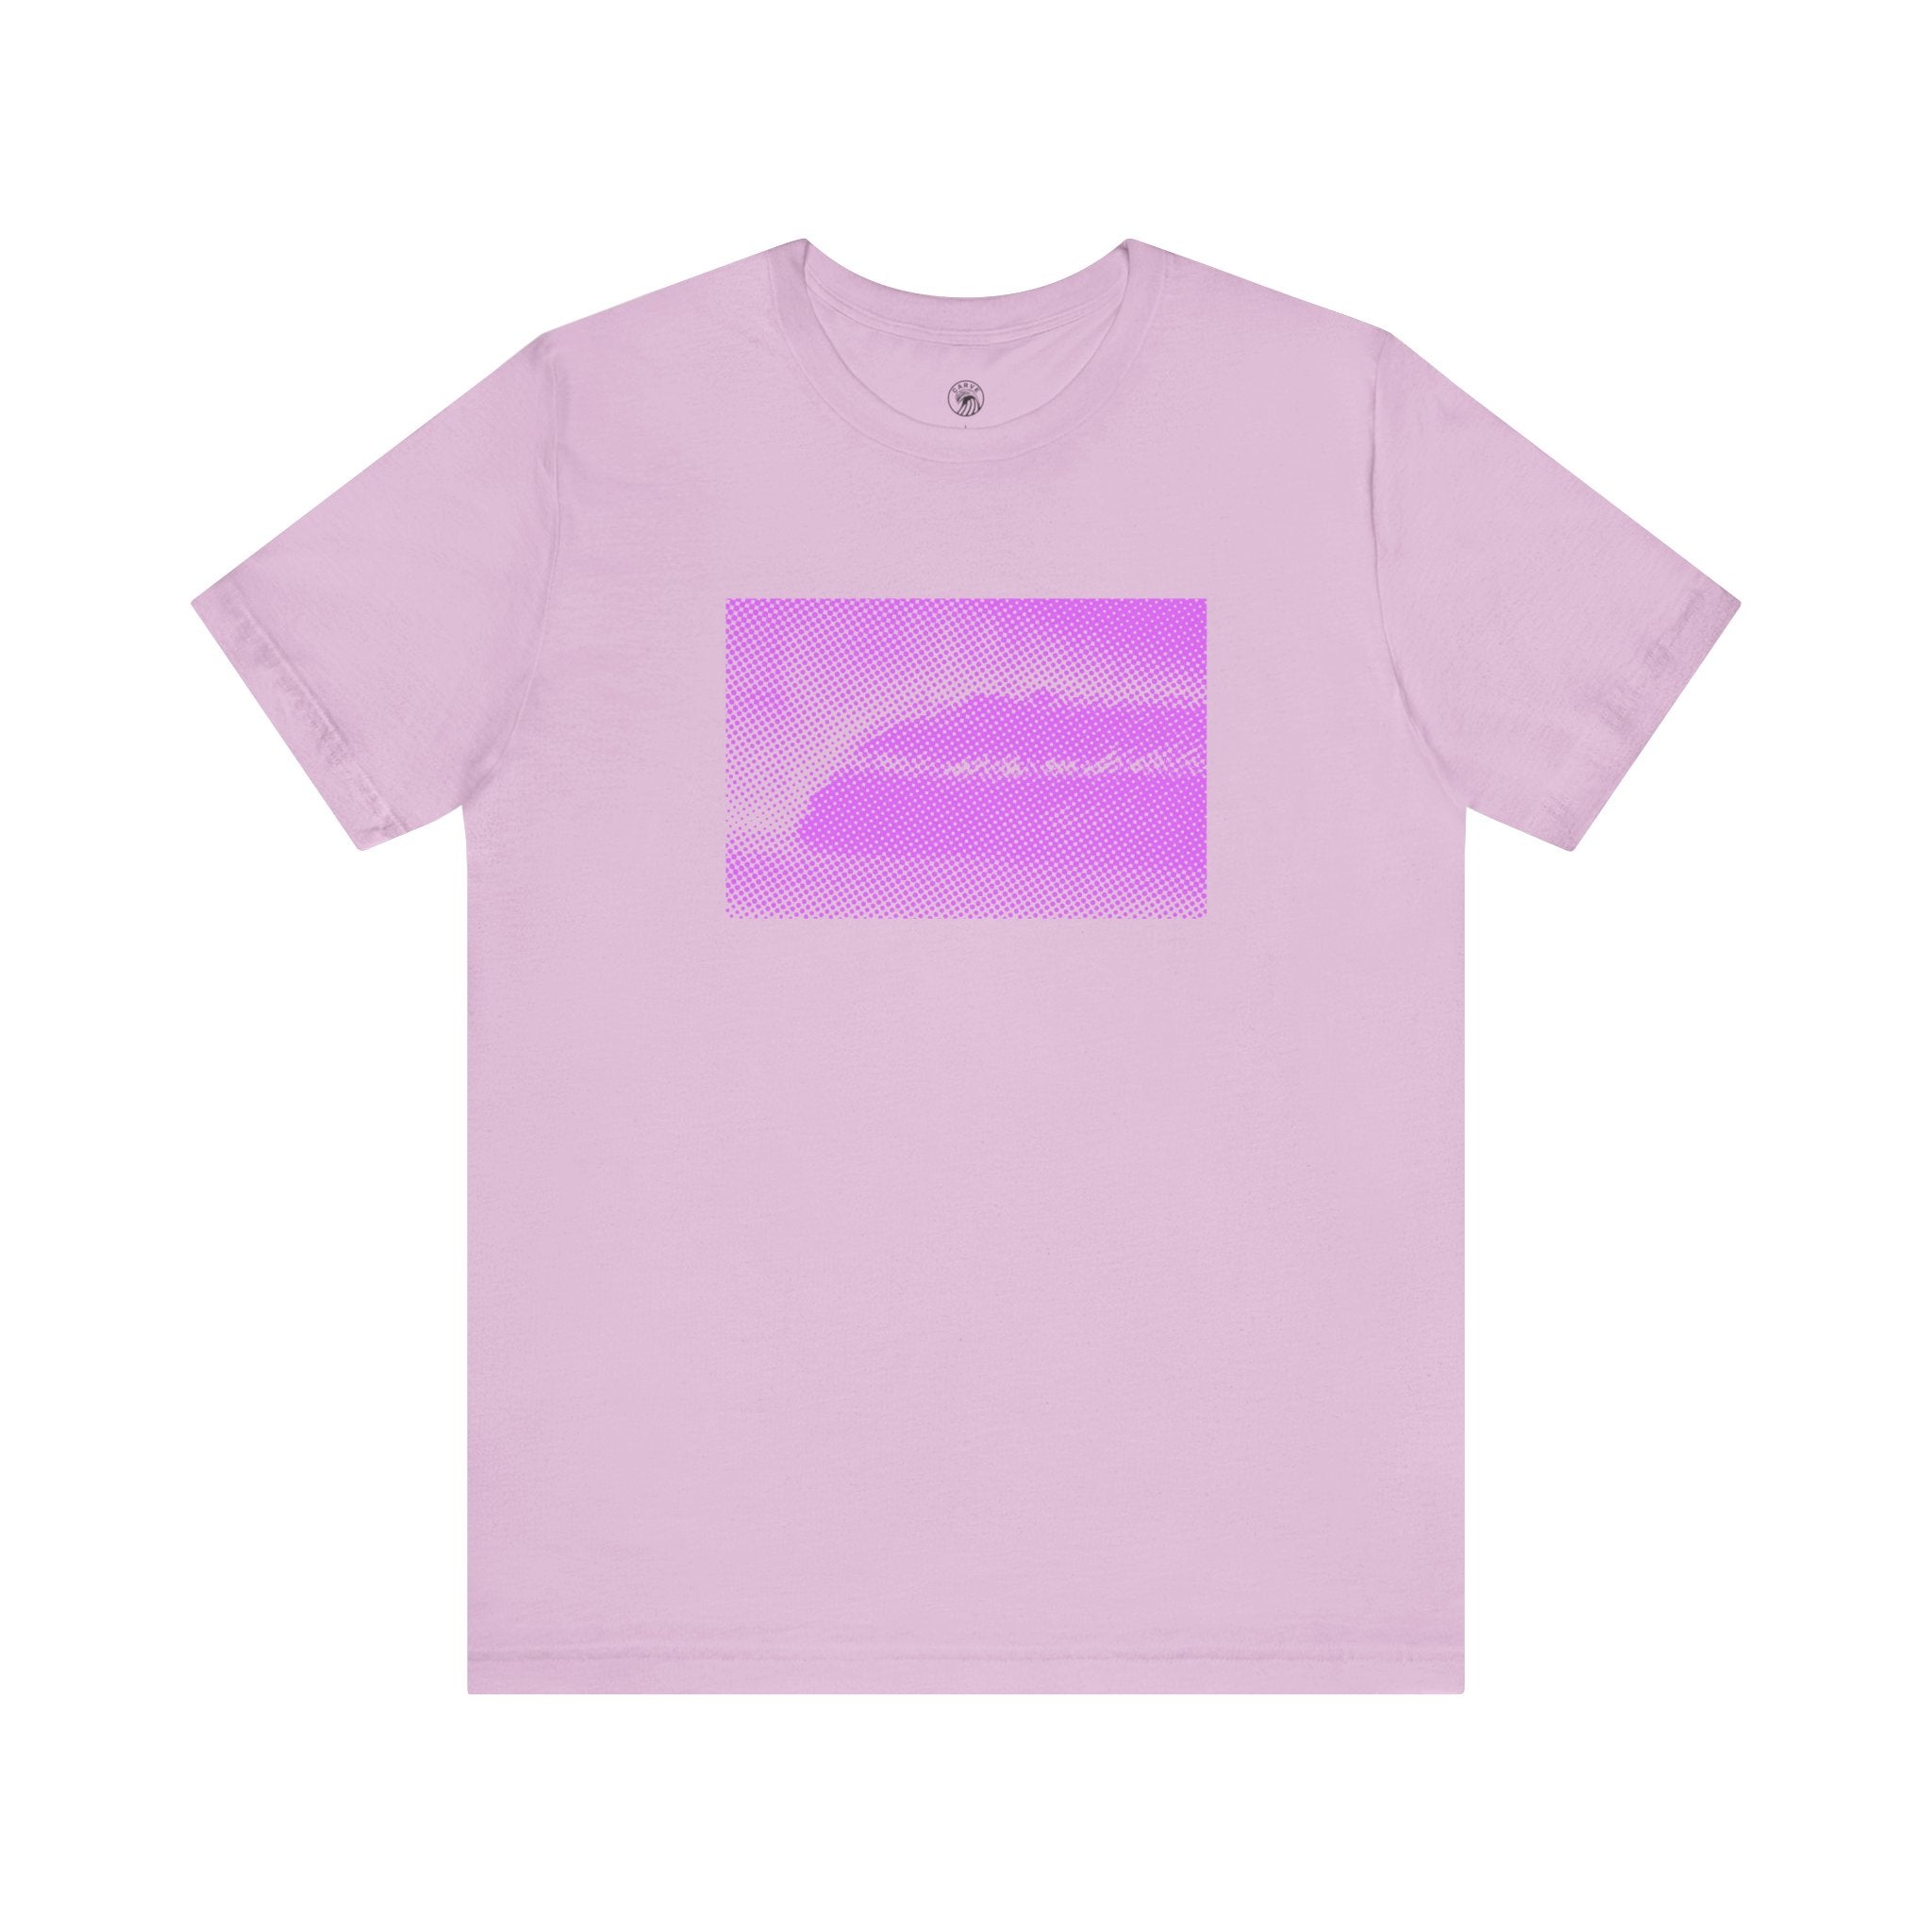 T-shirt: Miami Vice Left